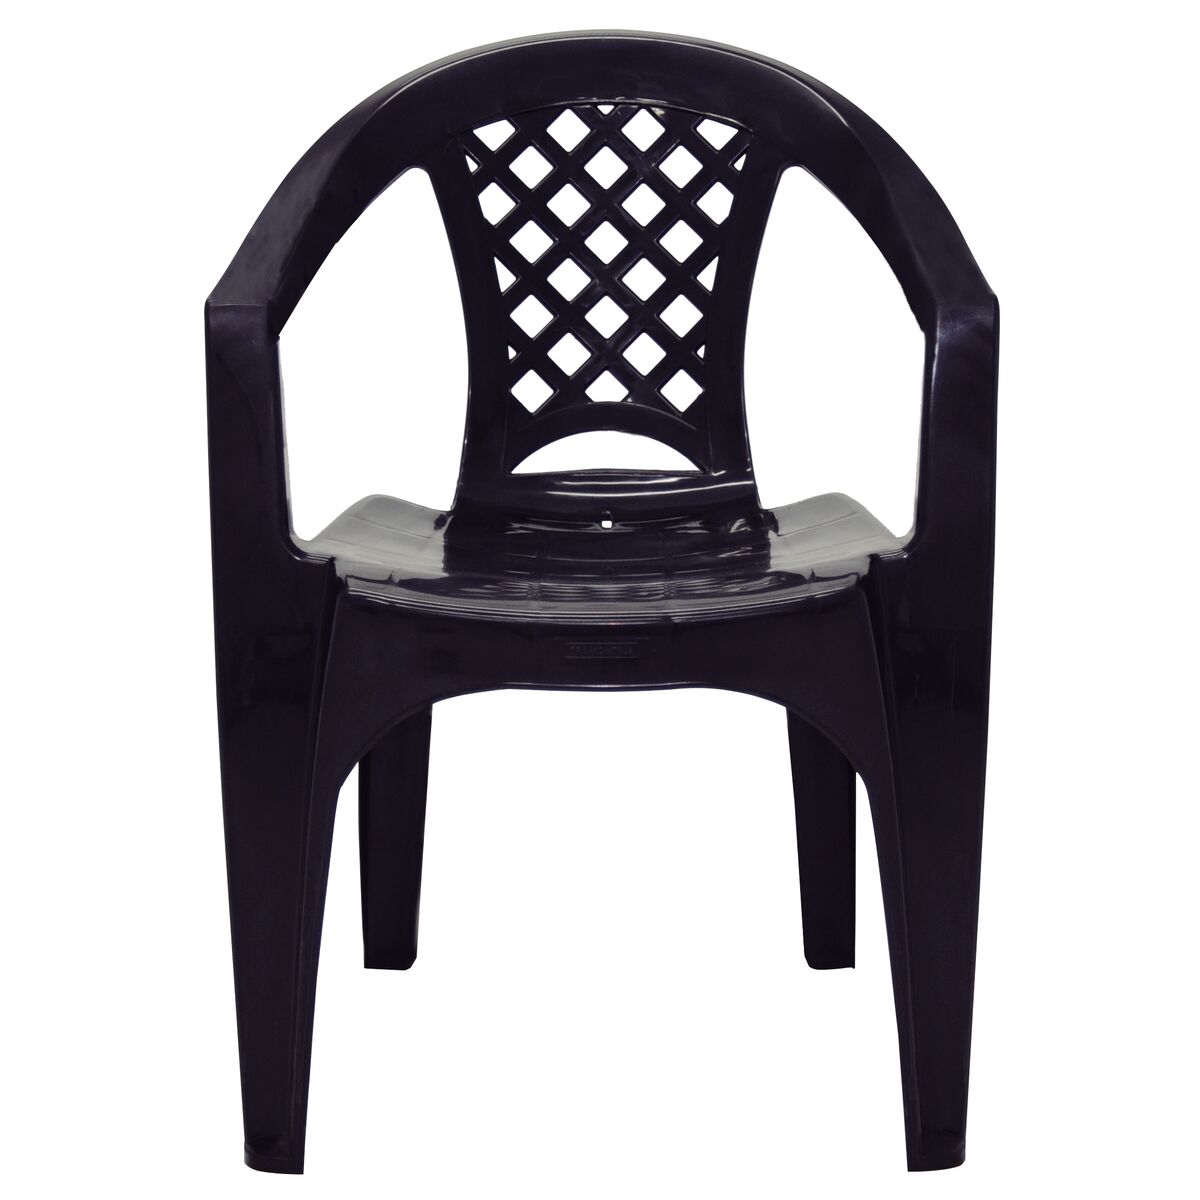 Cadeira Tramontina Iguape em Polipropileno Cinza - Tramontina - 92221210